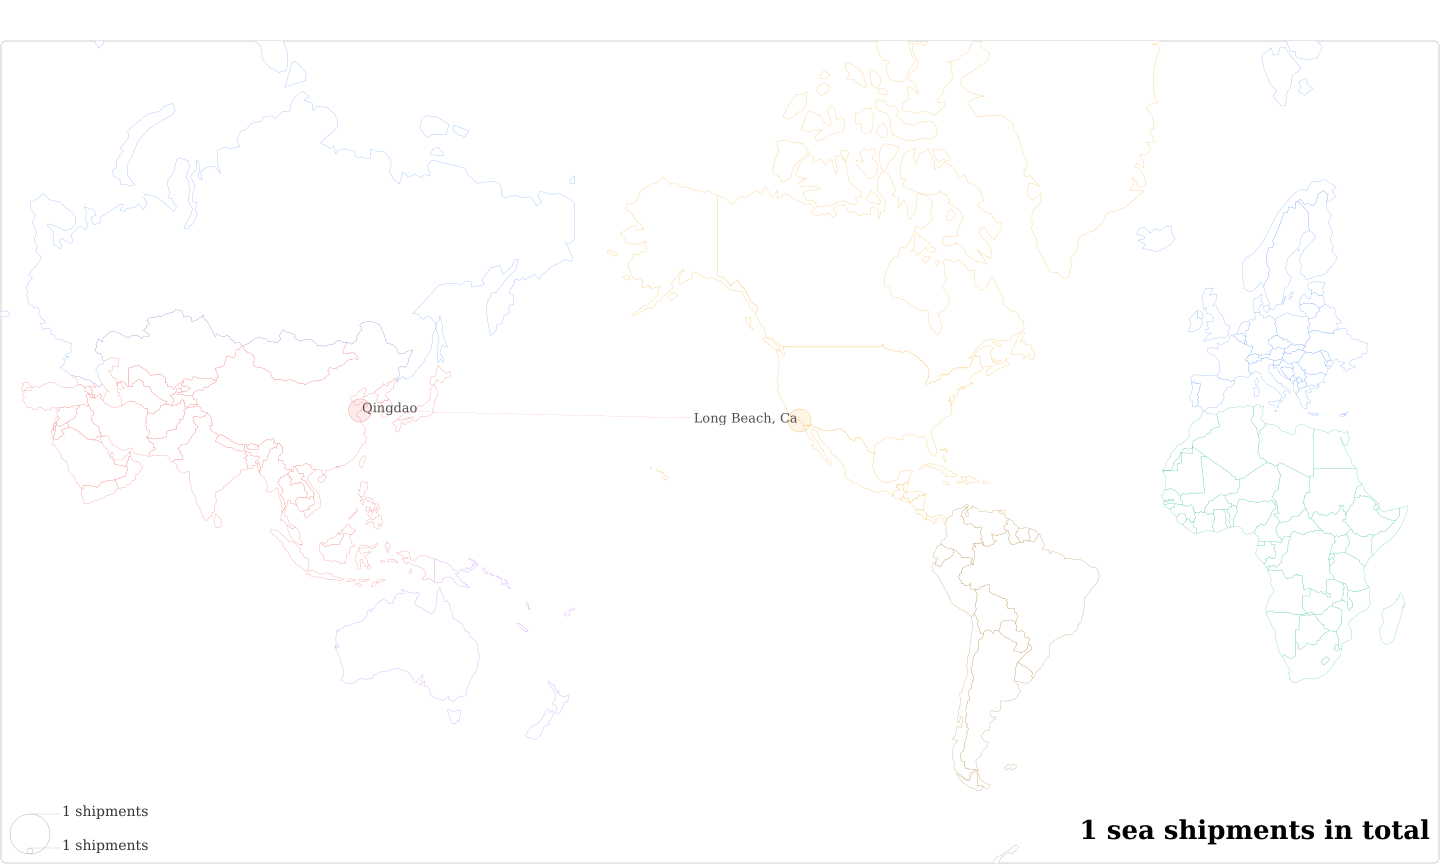 Hagar Restaurant Equipment Service's Imports Per Country Map